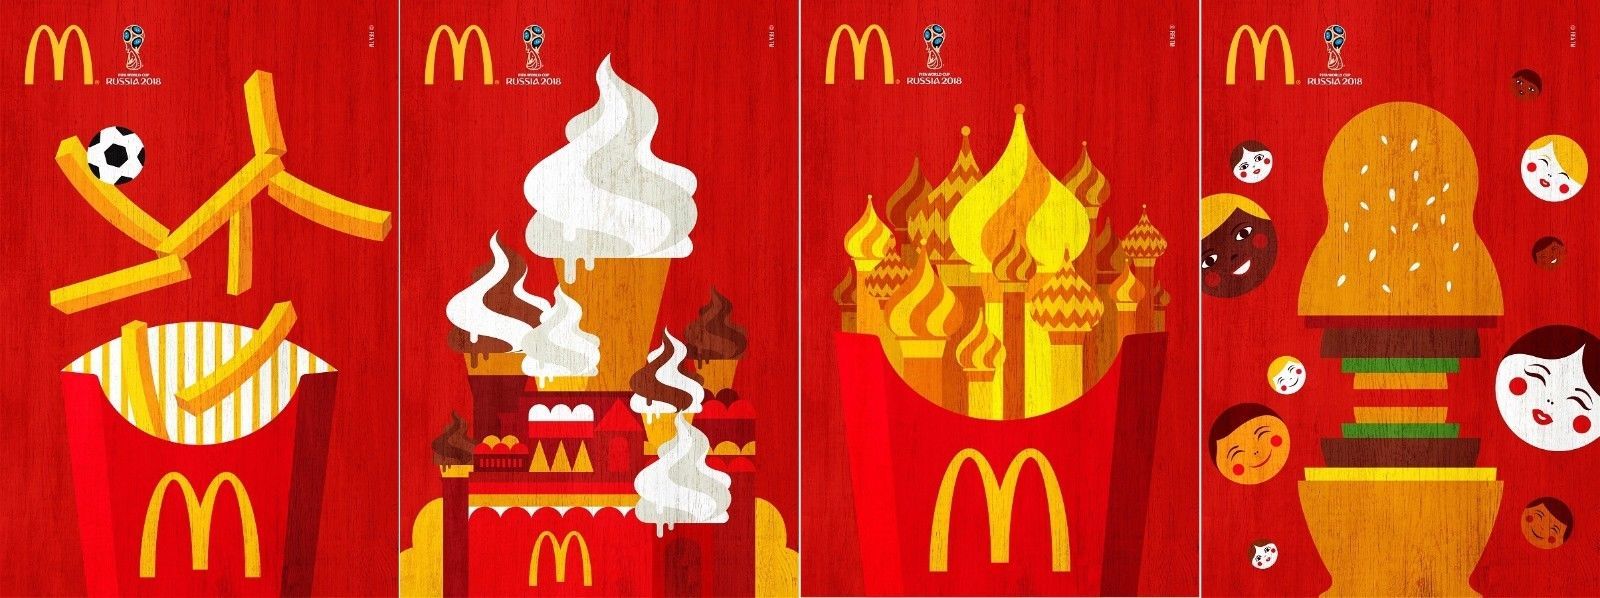 FIFA World Cup McDonald's AD Poster 2018 Soccer Tournament Print 24x36" 27x40" - $11.90 - $24.90